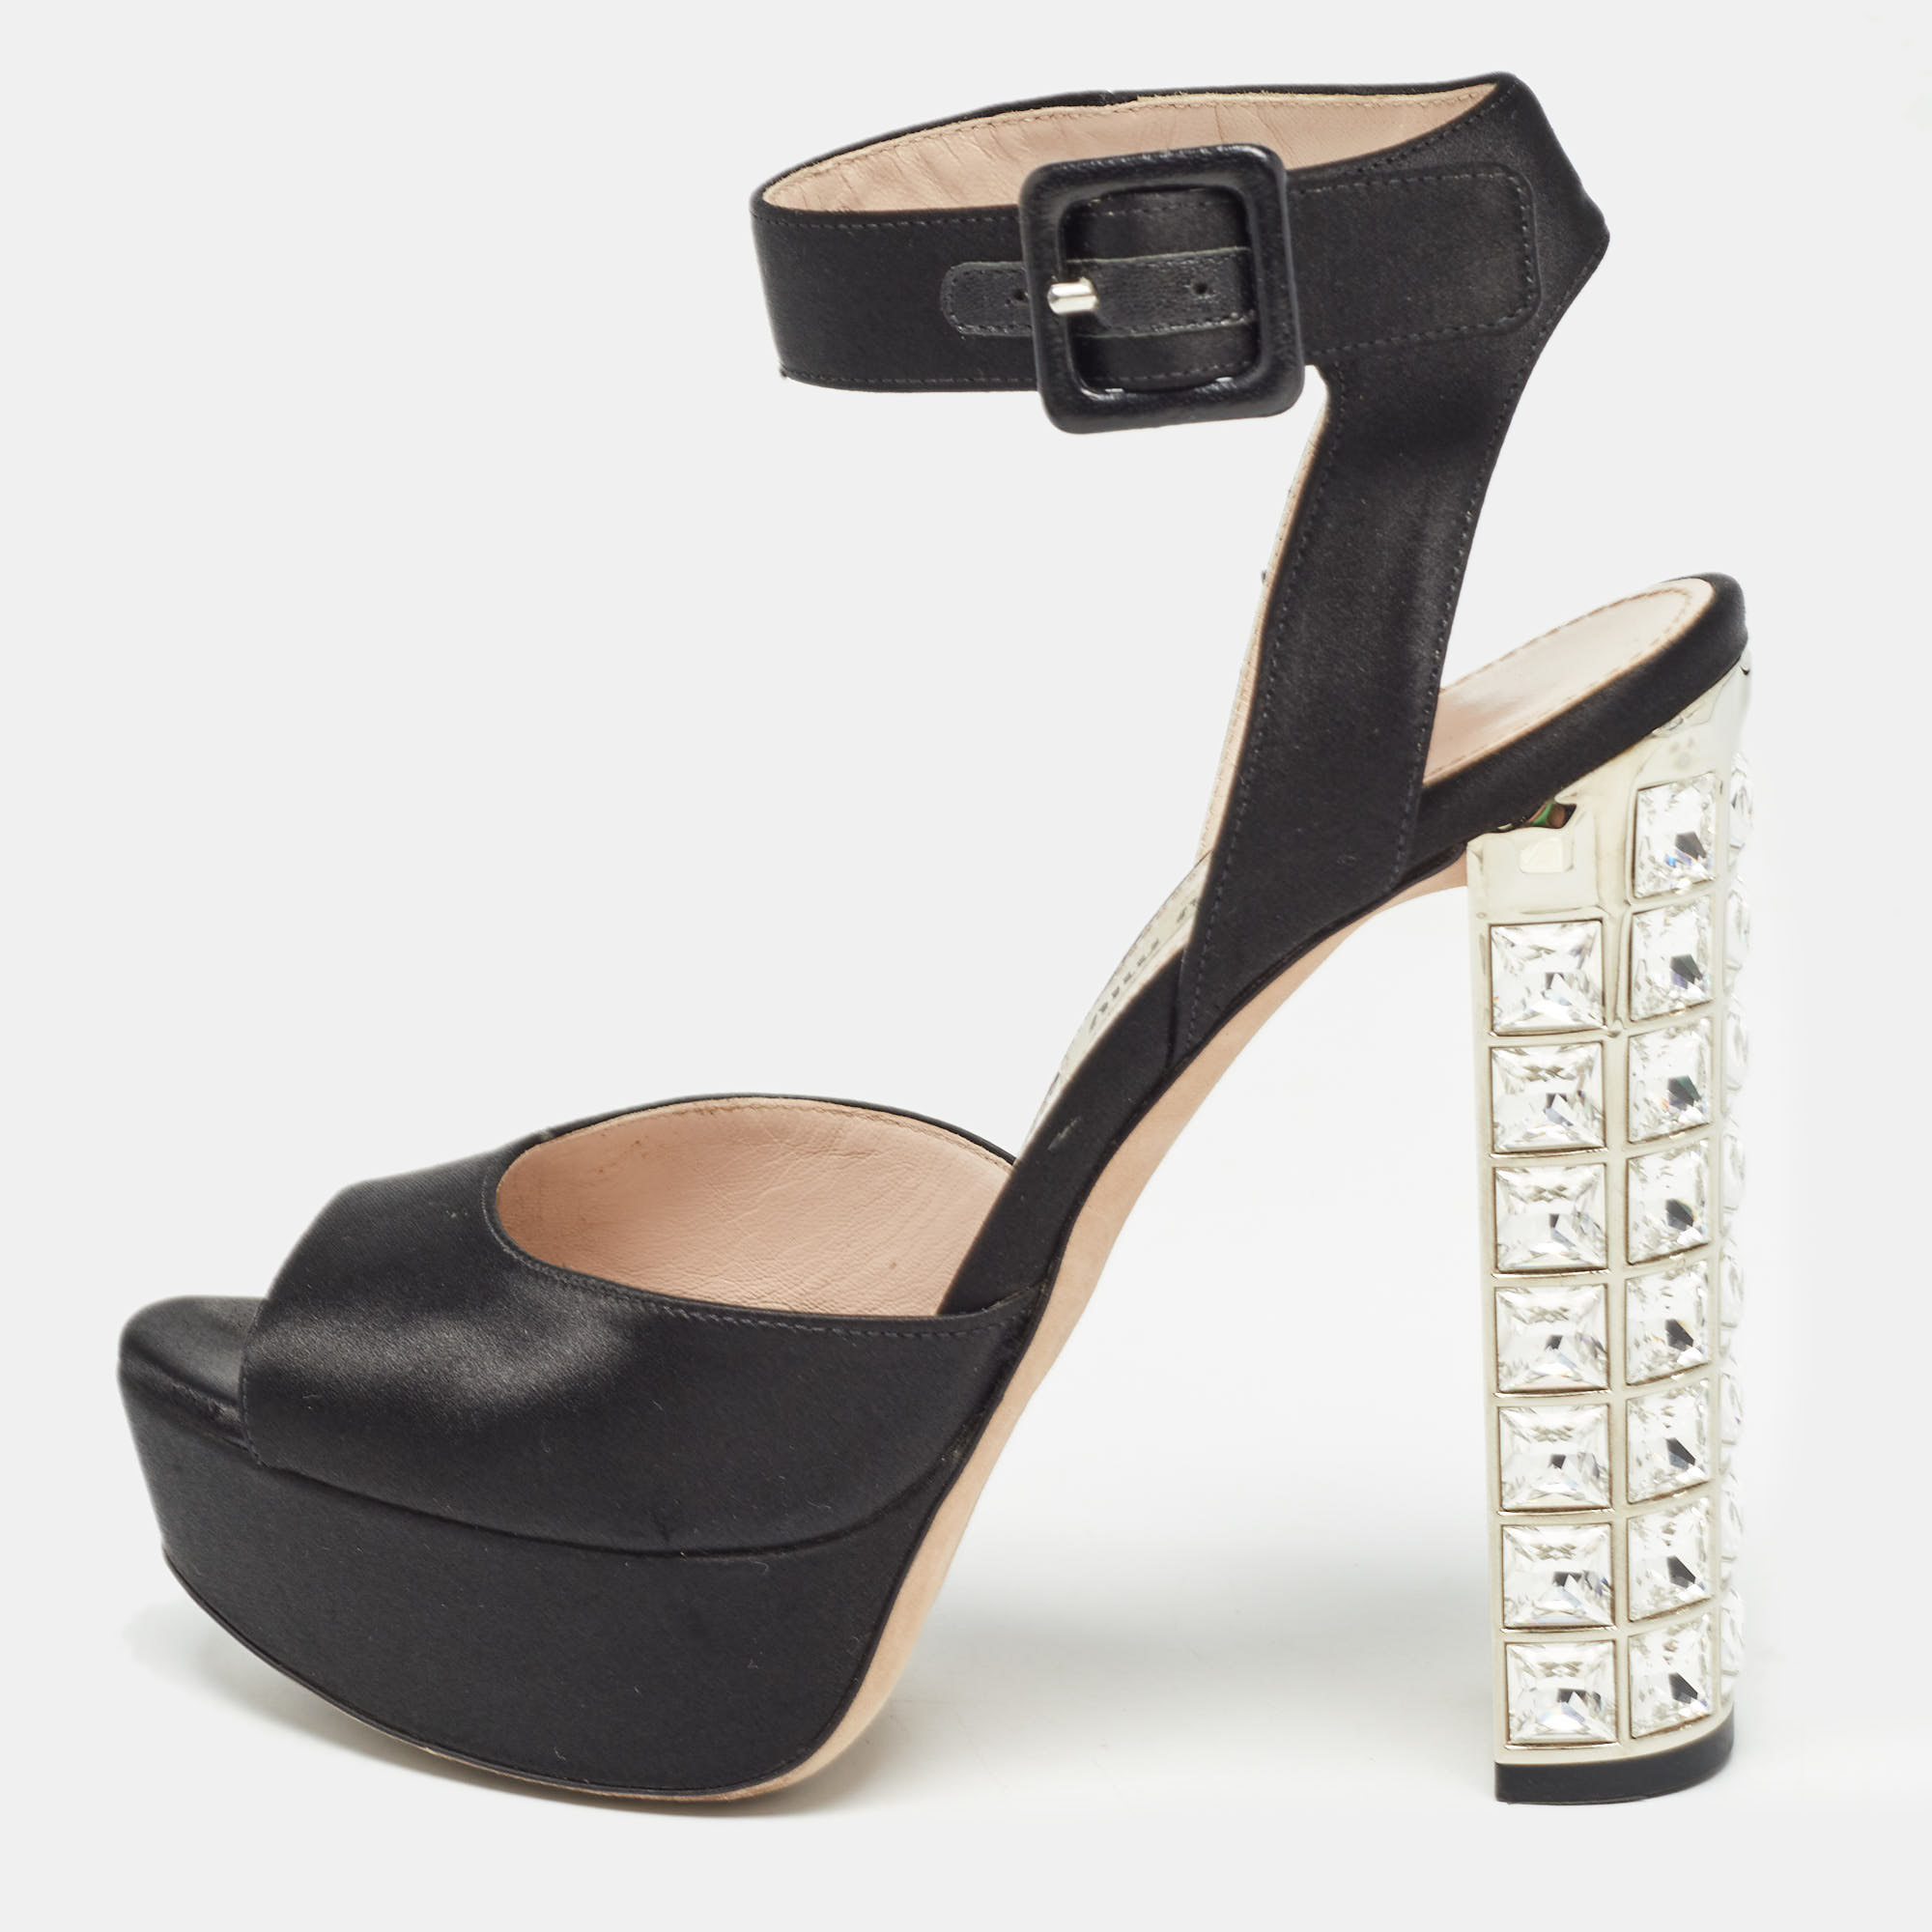 Miu miu black satin embellished block heel platform sandals size 35.5